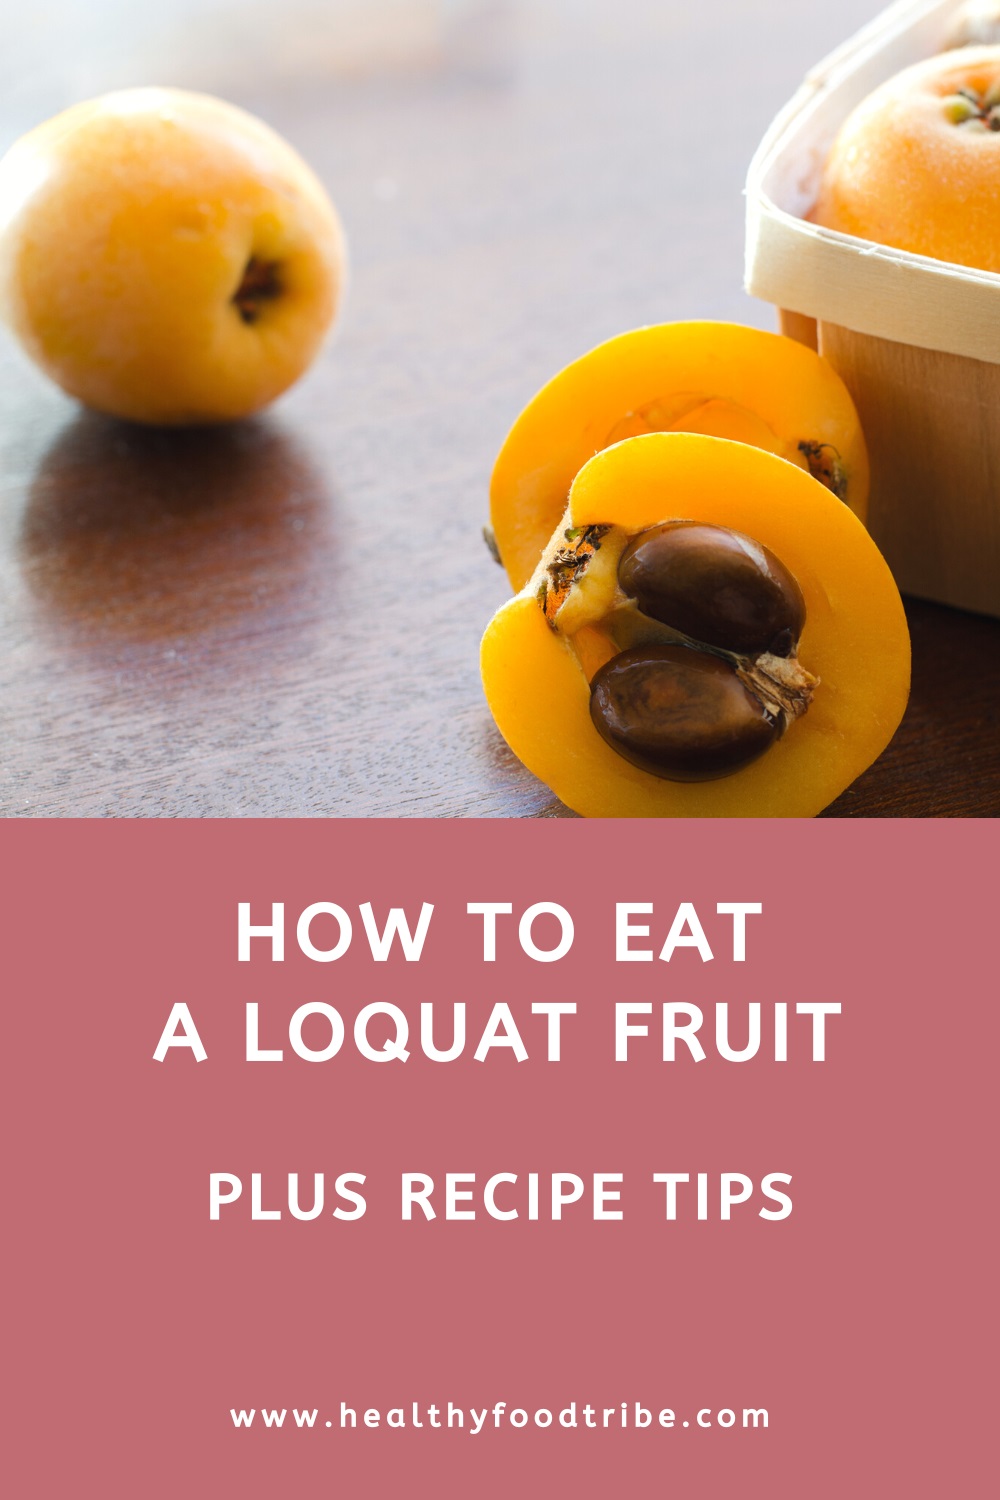 How to eat a loquat fruit (plus recipe tips)